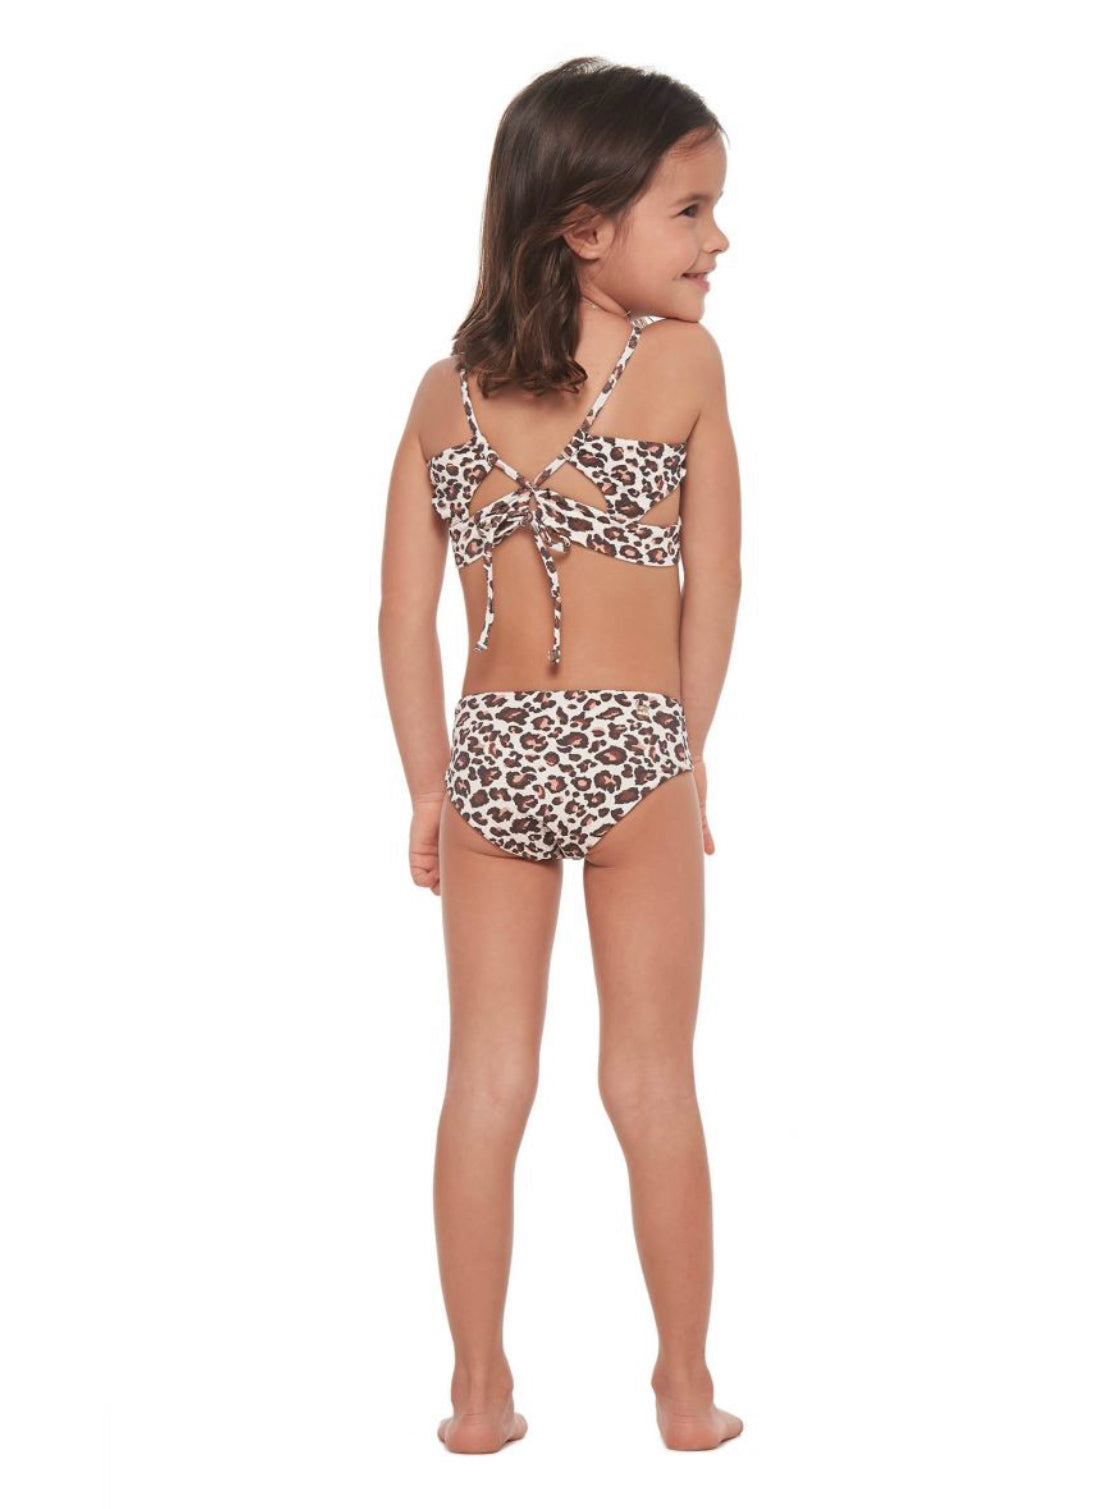 Kids cheetah print bikini set